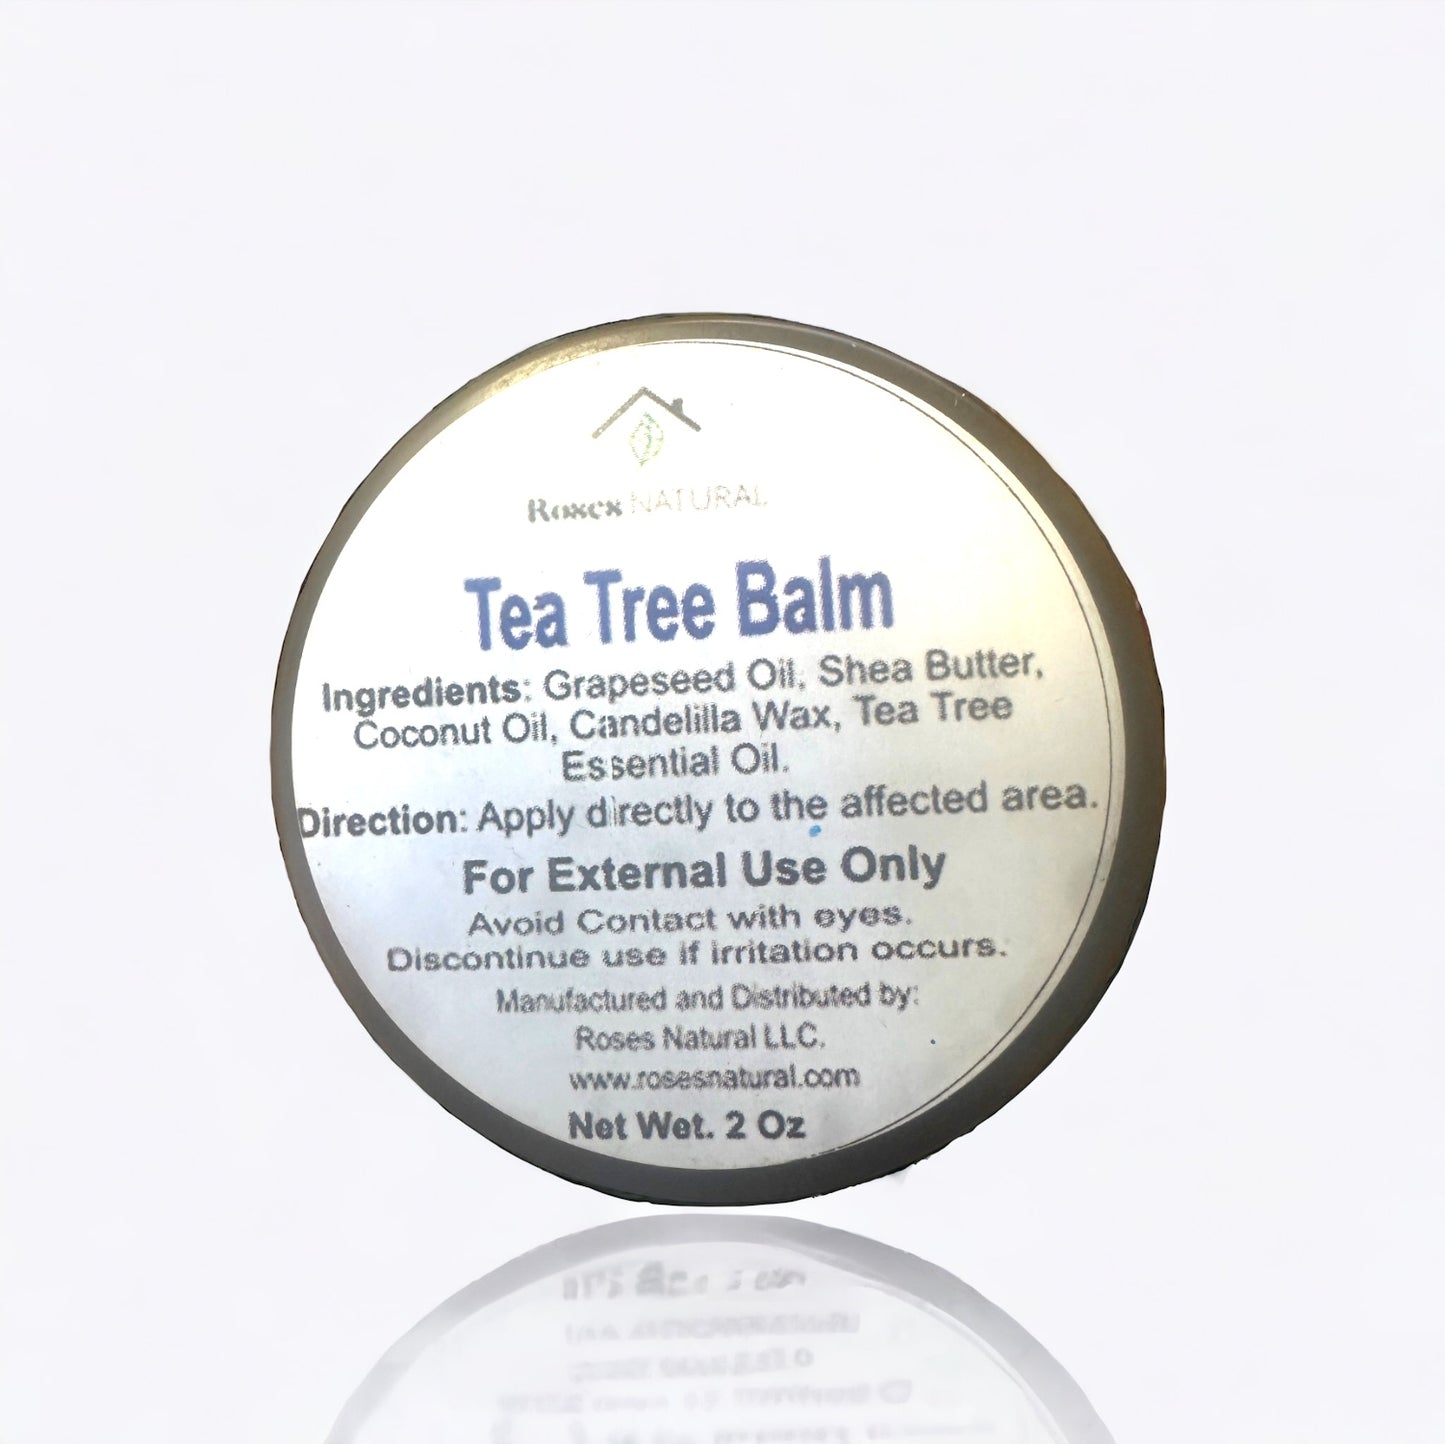 Tea Tree Balm